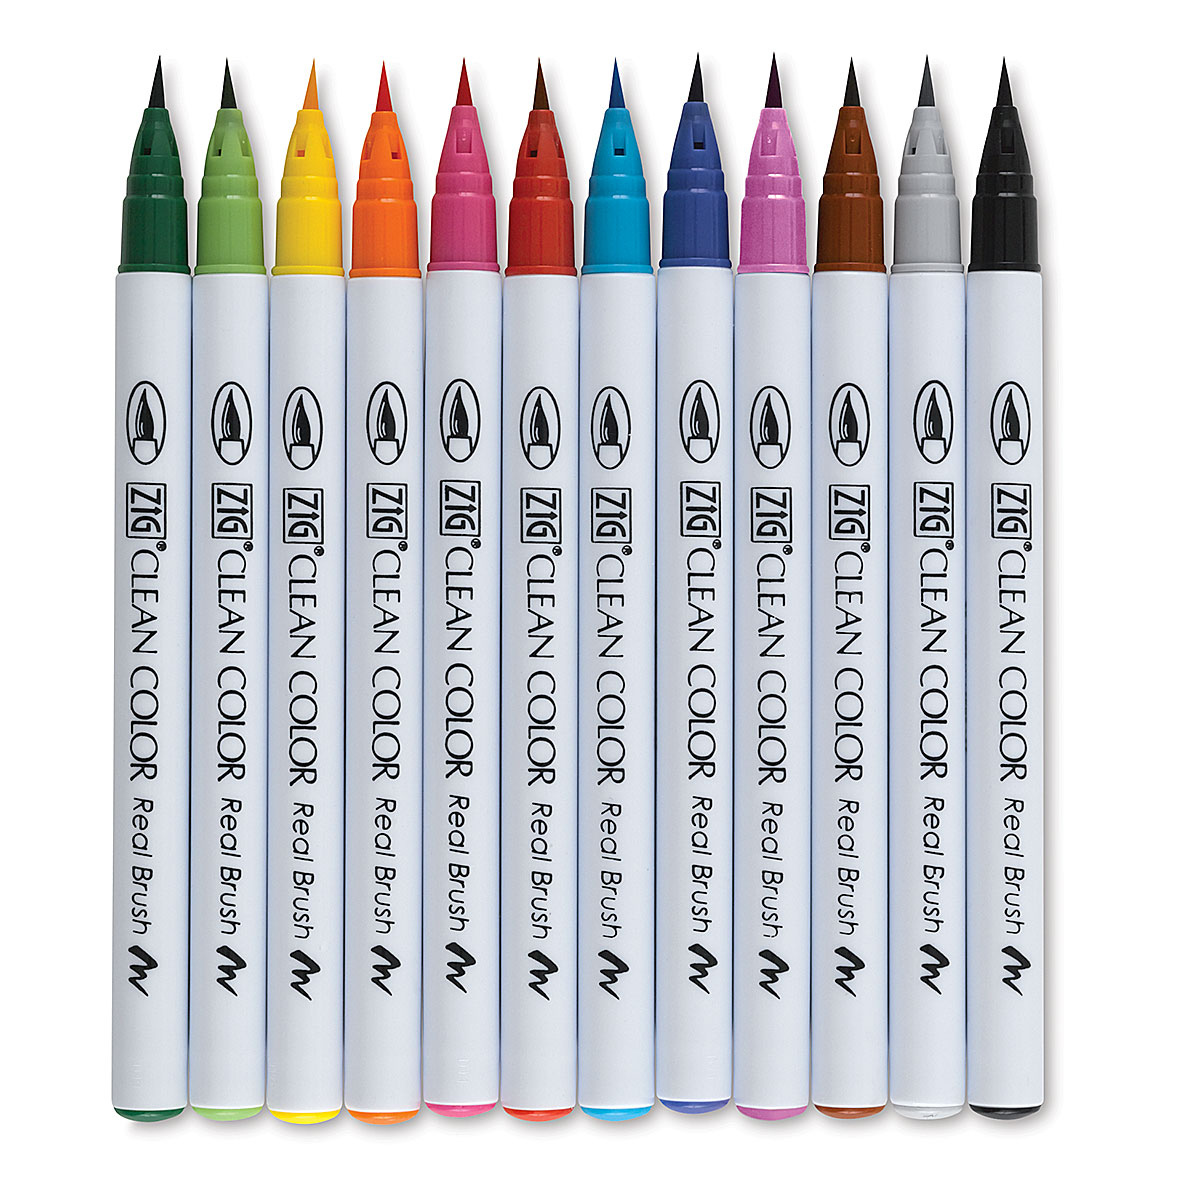 Kuretake Zig Clean Color Real Brush Pens and Sets